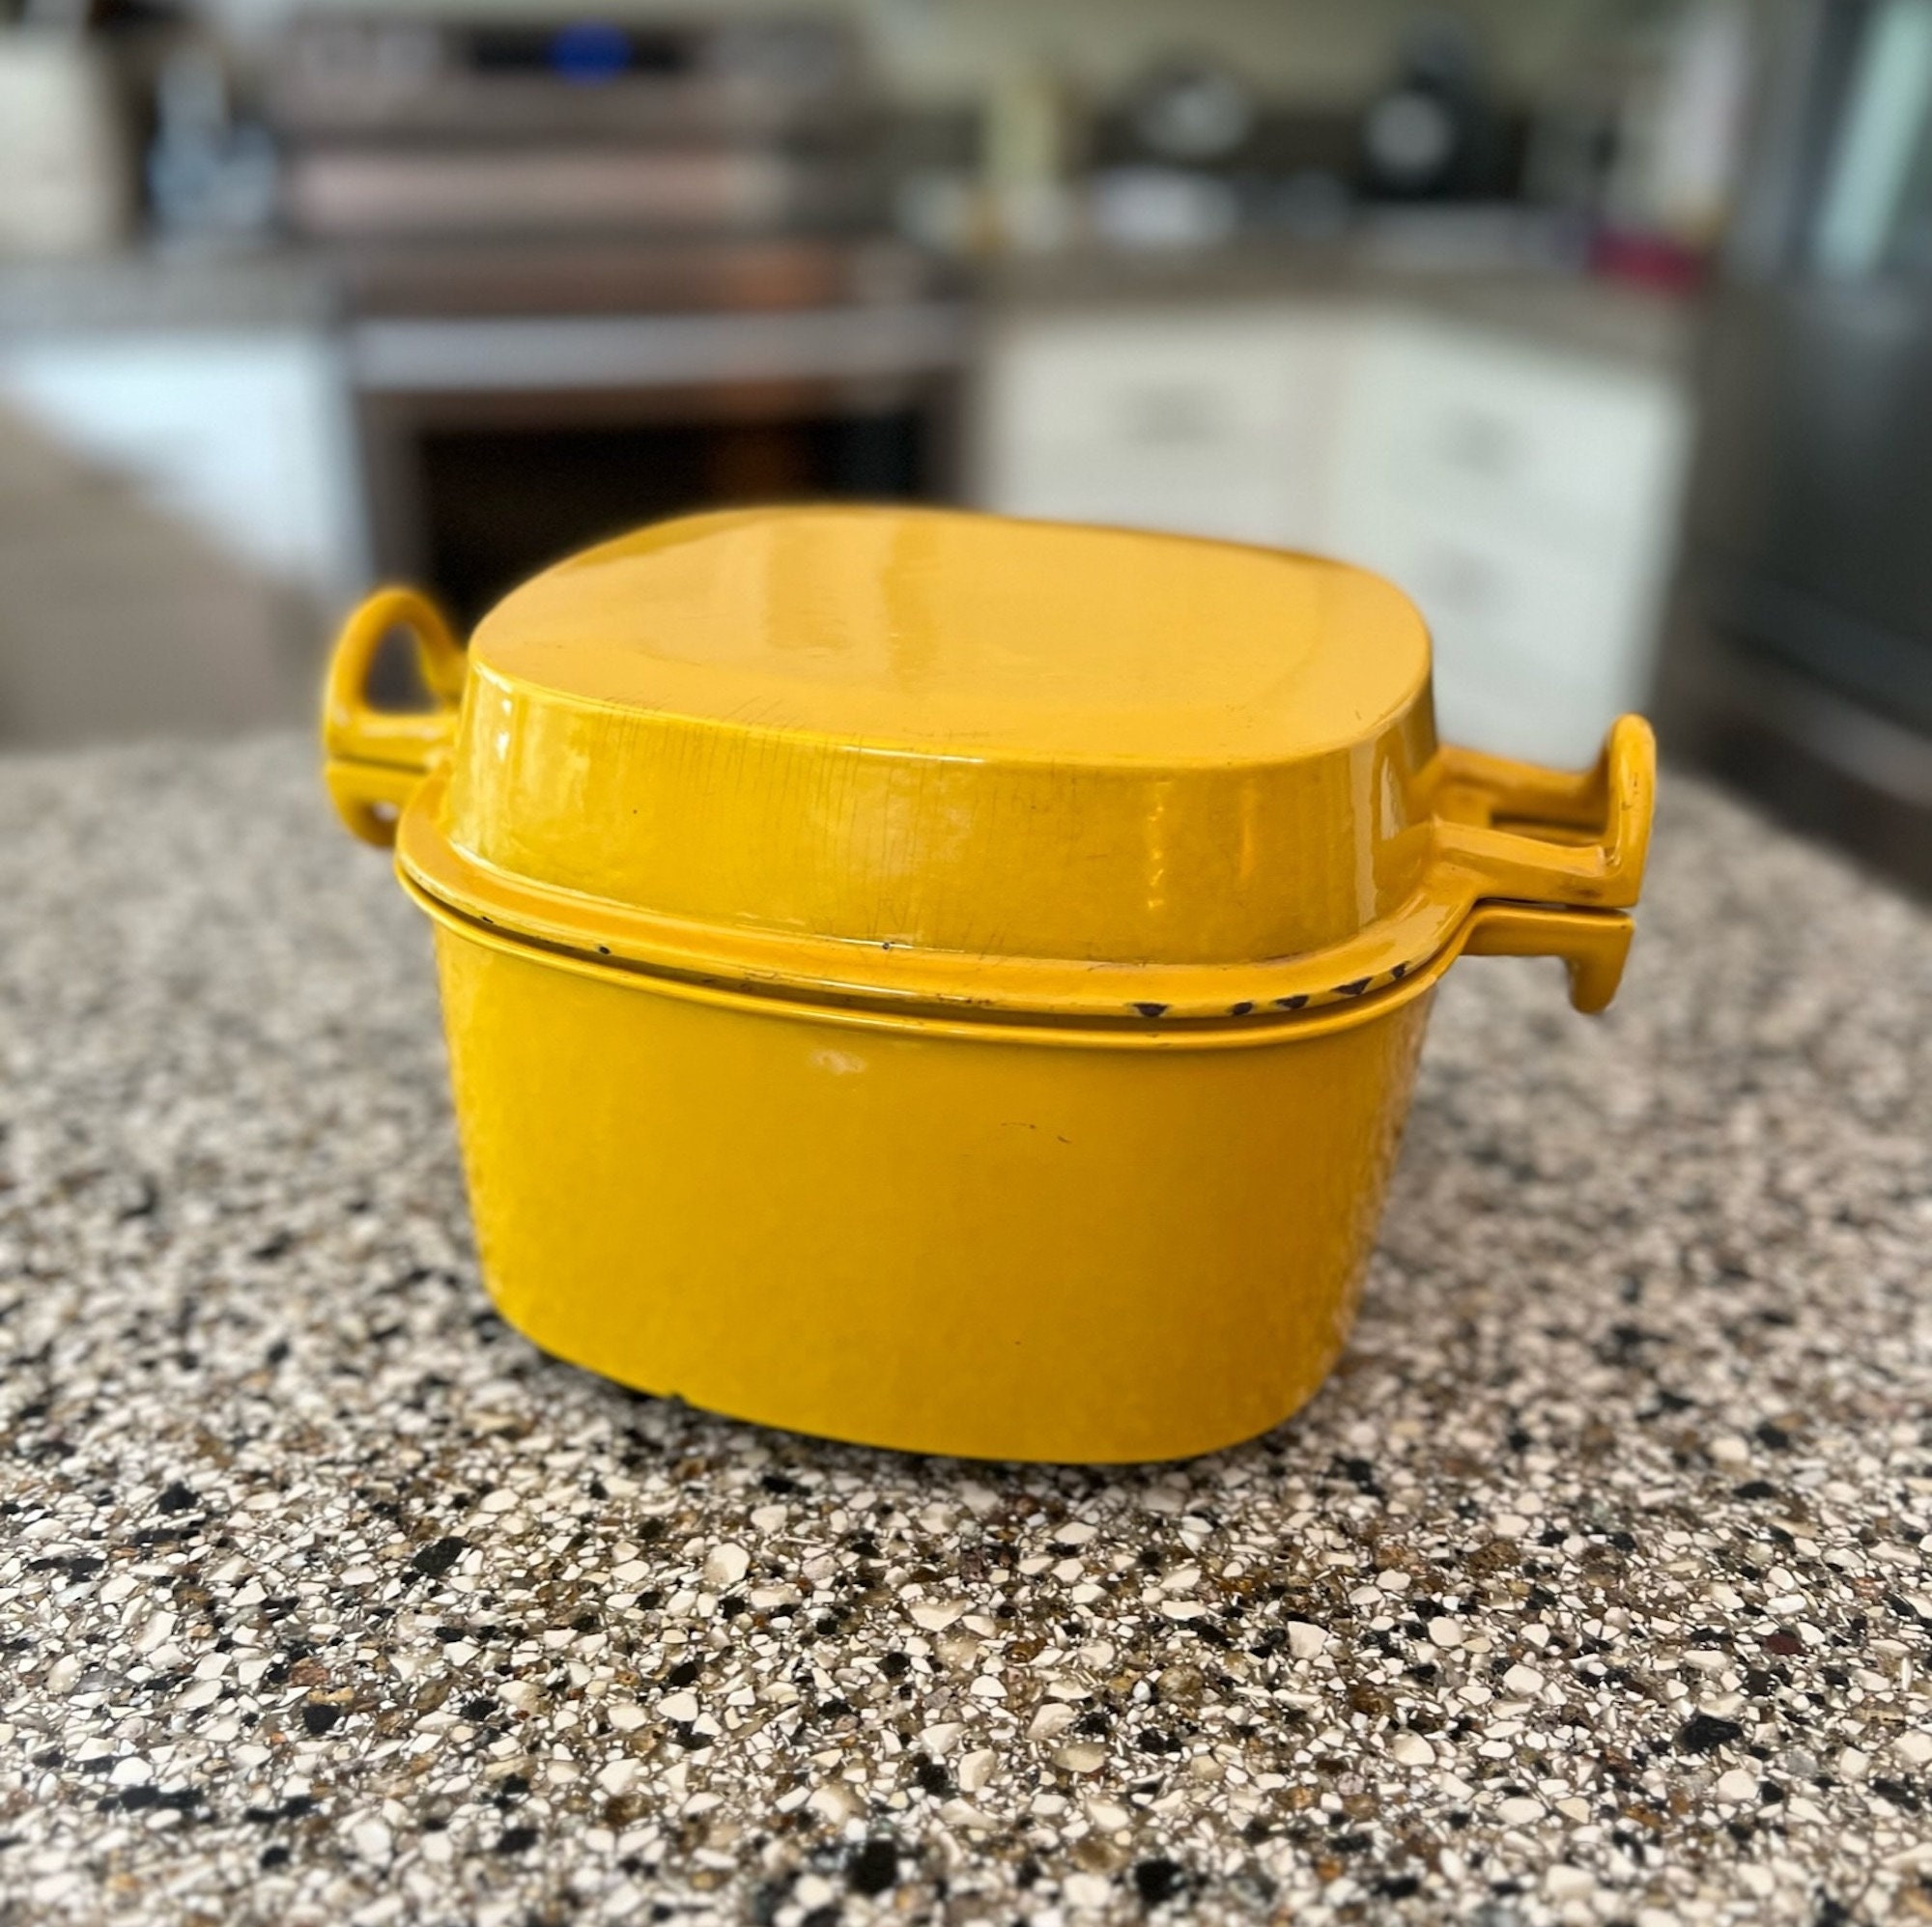 $98.36 RJ Legend 1.4 Liter Mustard Yellow Cast Iron Pot, Enameled